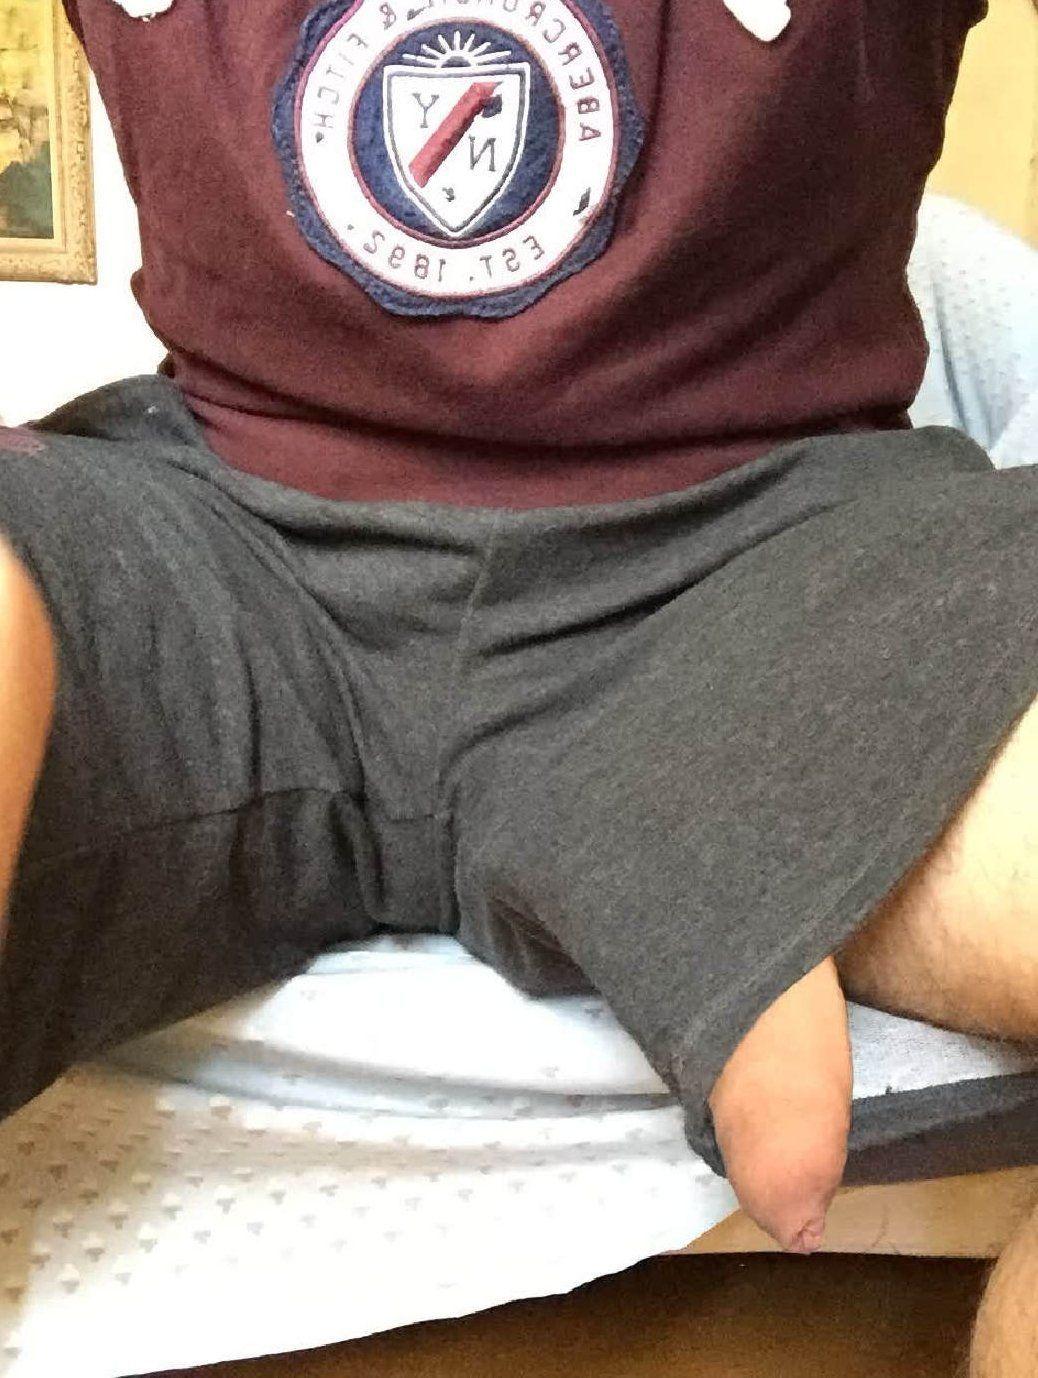 Cock poking through shorts